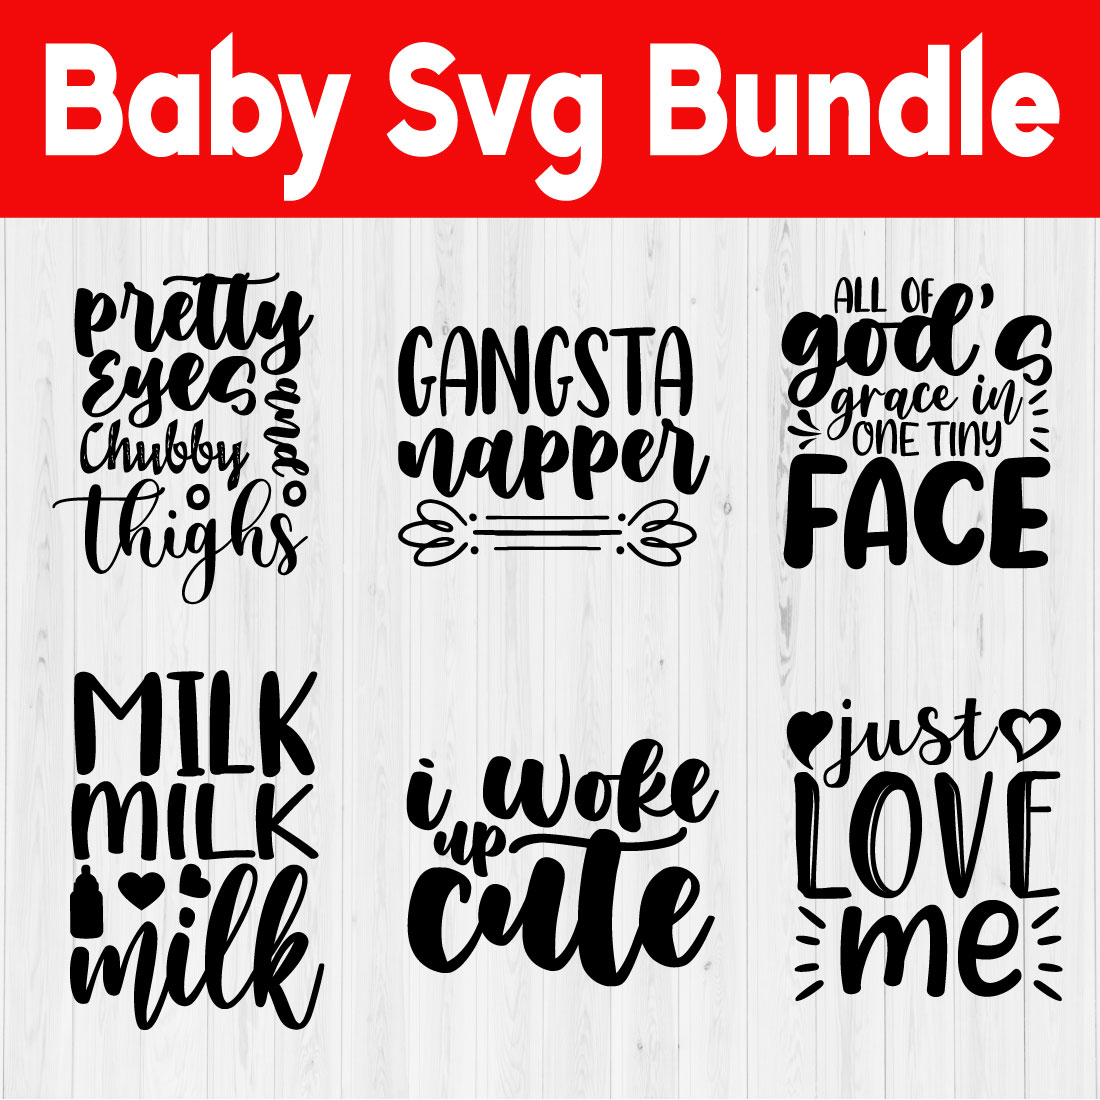 Baby Svg Bundle Vol1 cover image.